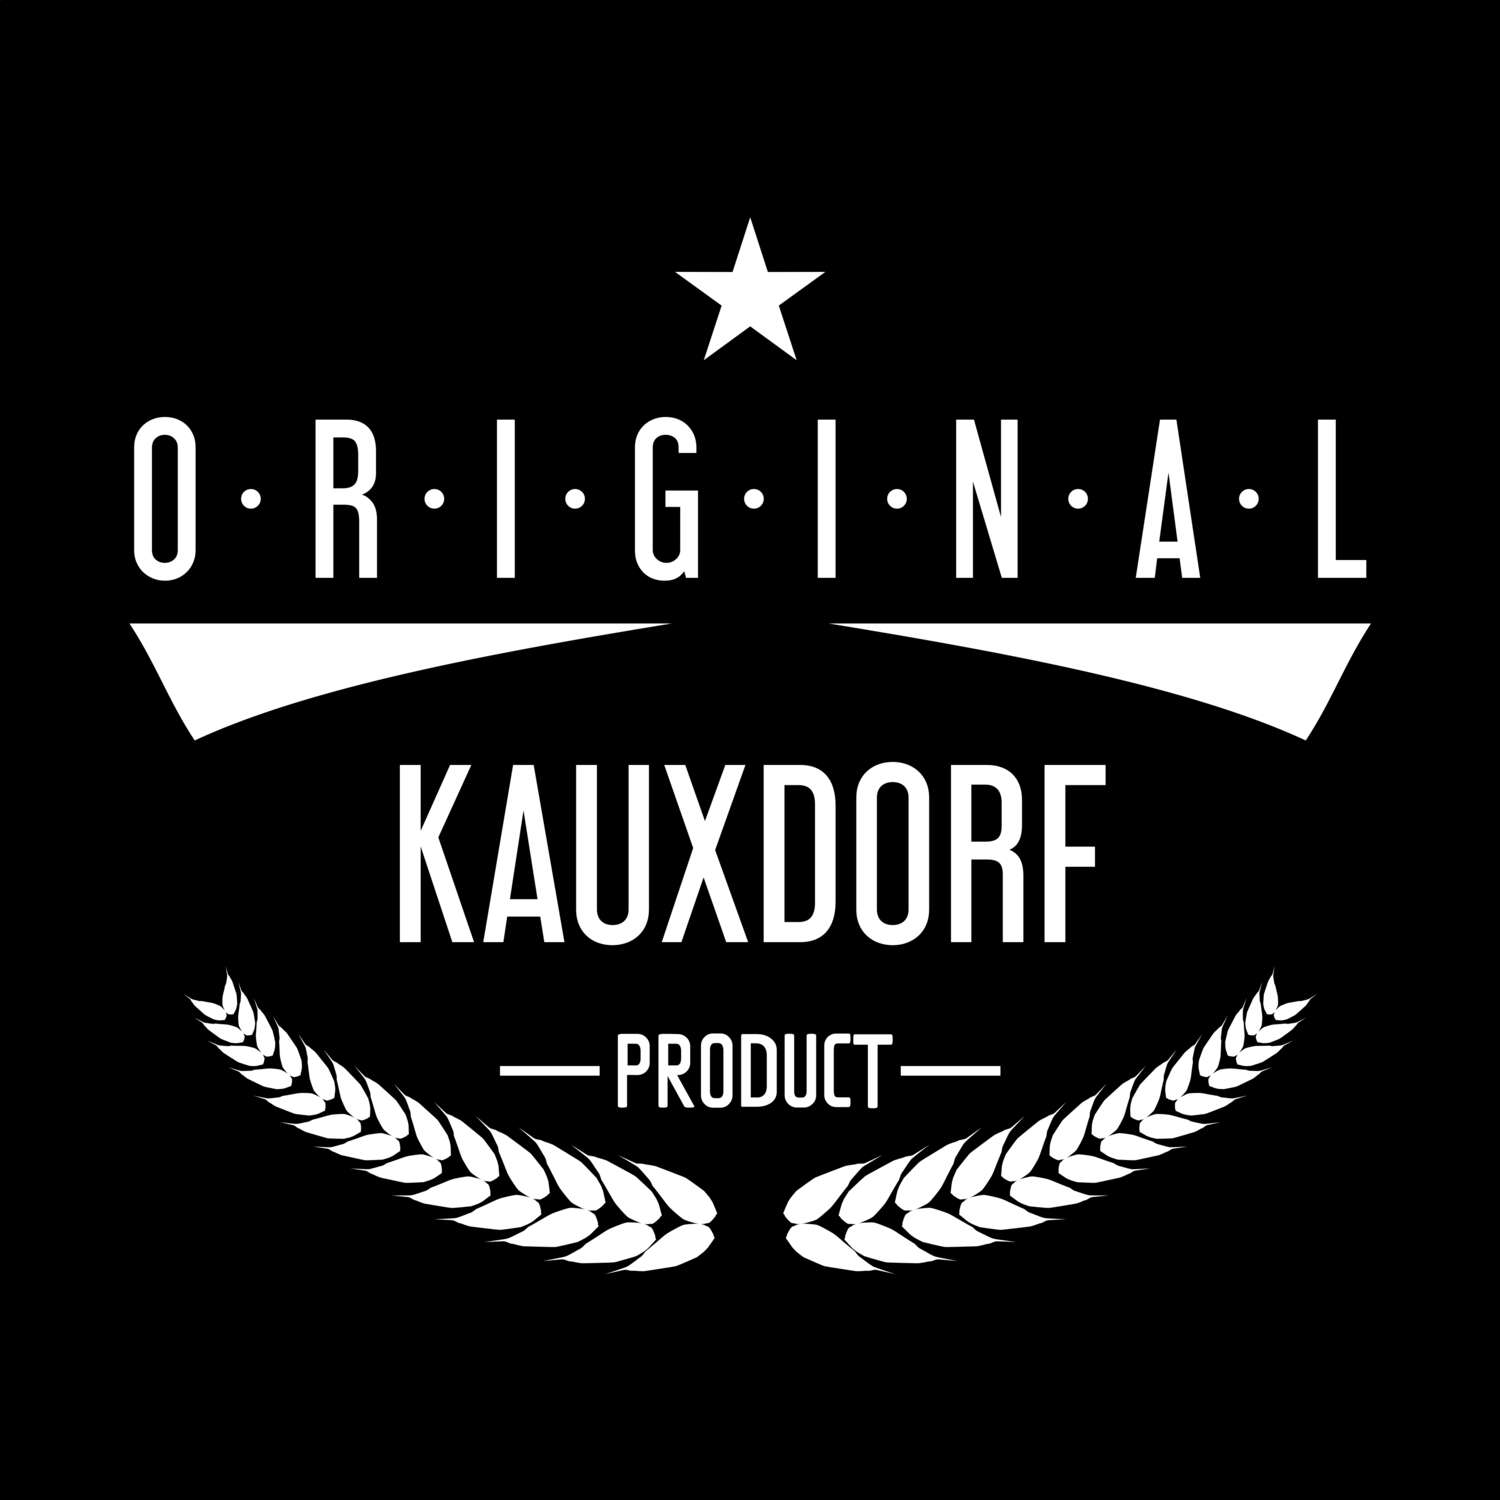 Kauxdorf T-Shirt »Original Product«